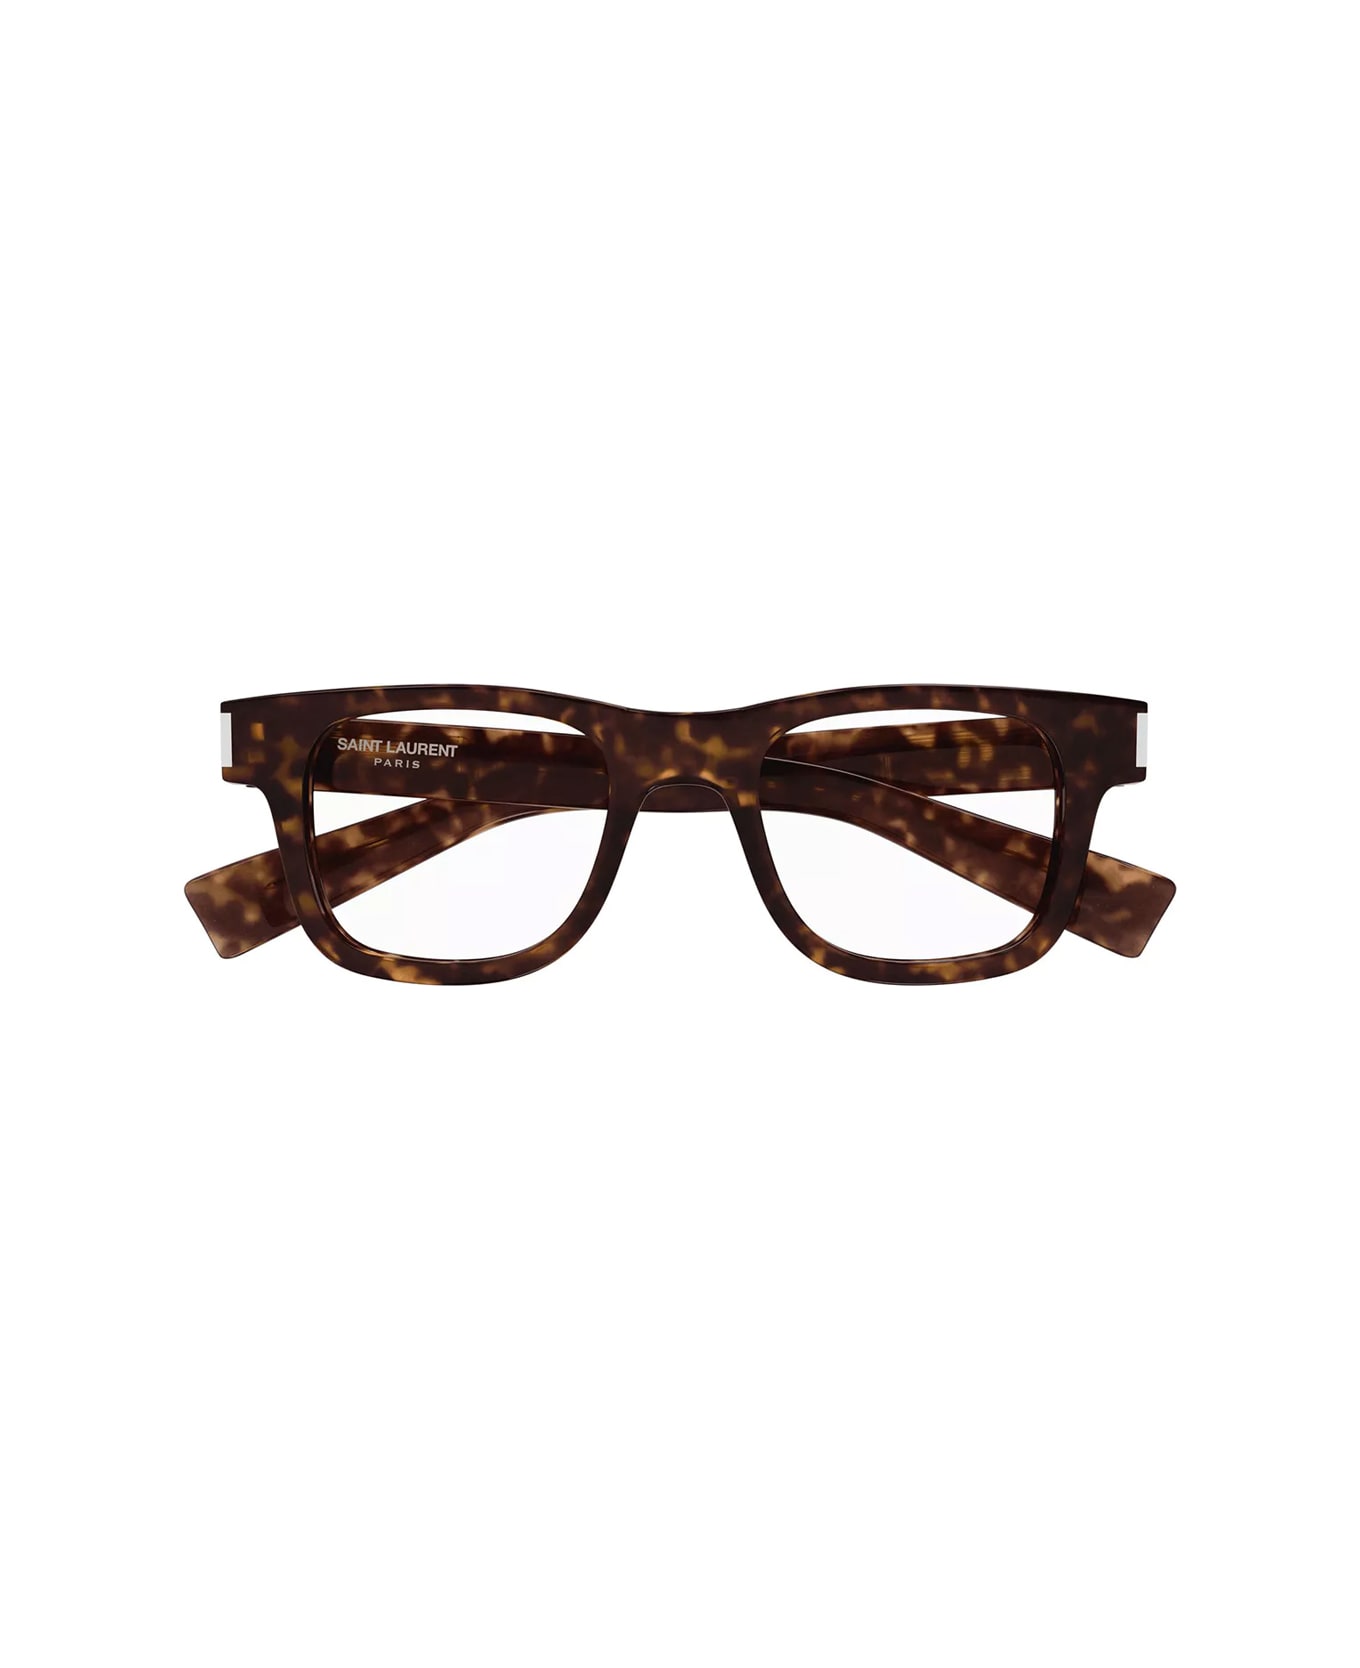 Saint Laurent Eyewear Sl 564 009 Glasses - Marrone アイウェア